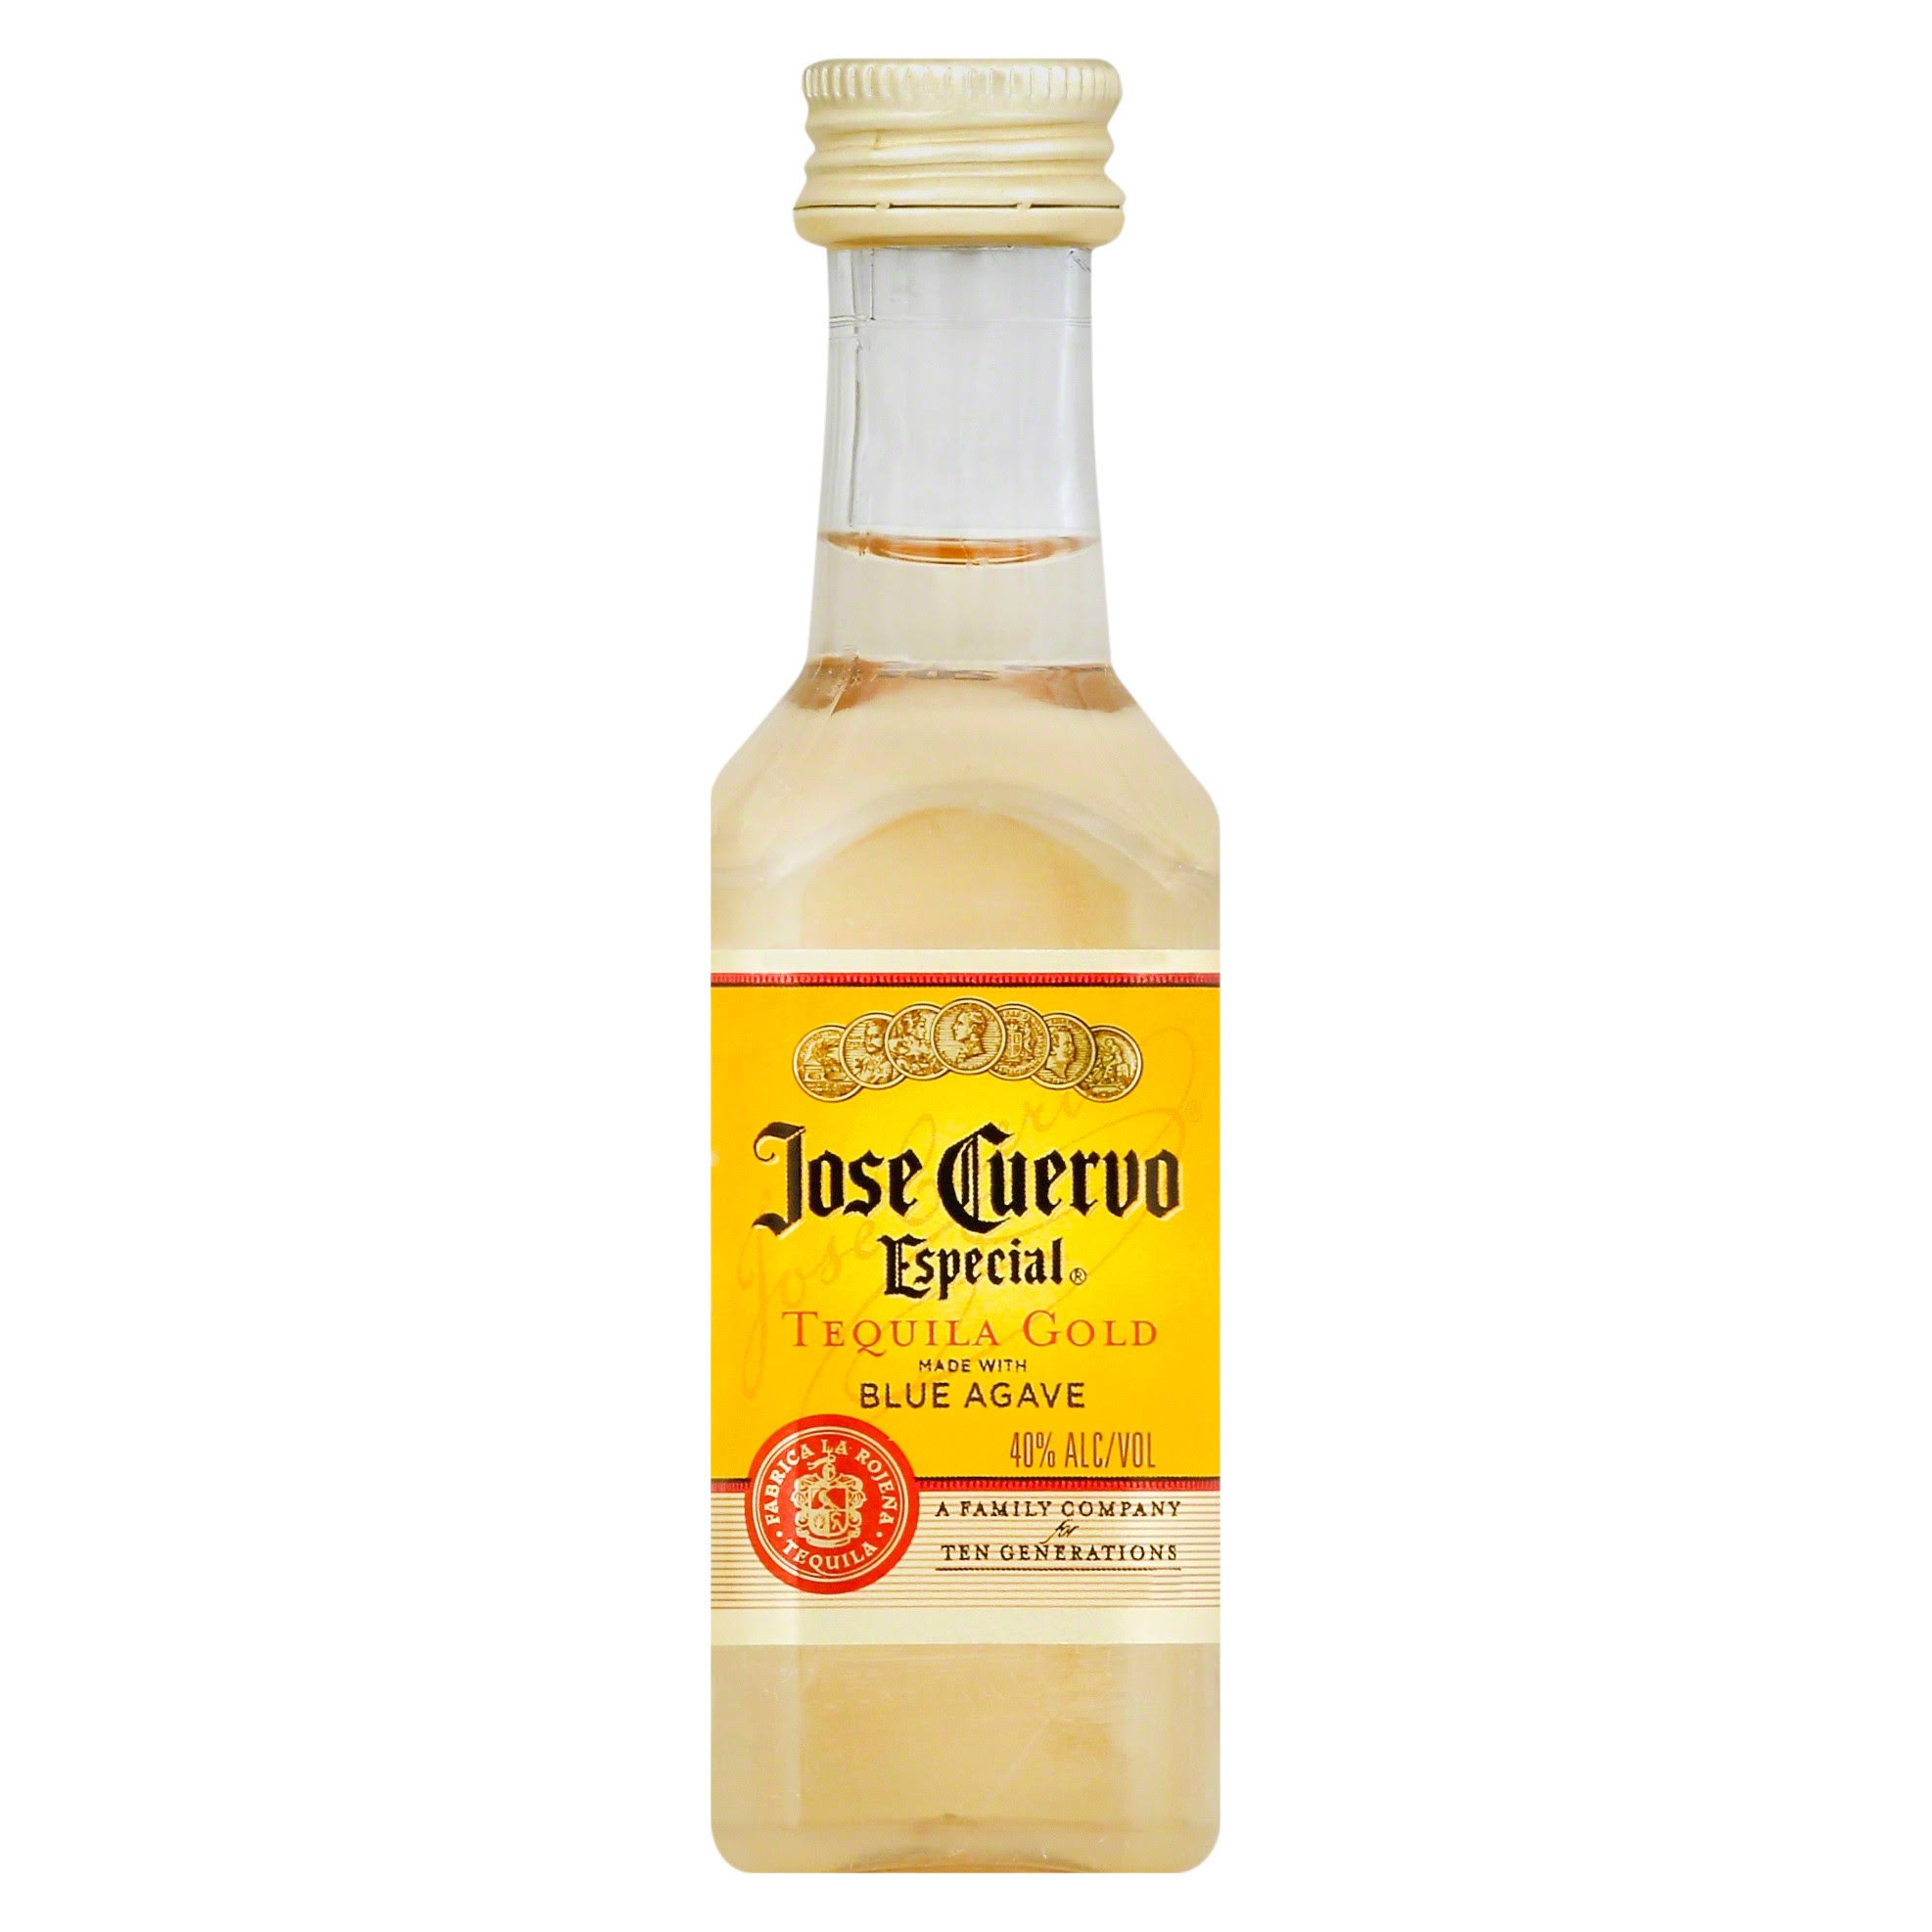 Jose Cuervo Especial Tequila, Gold - 50 ml